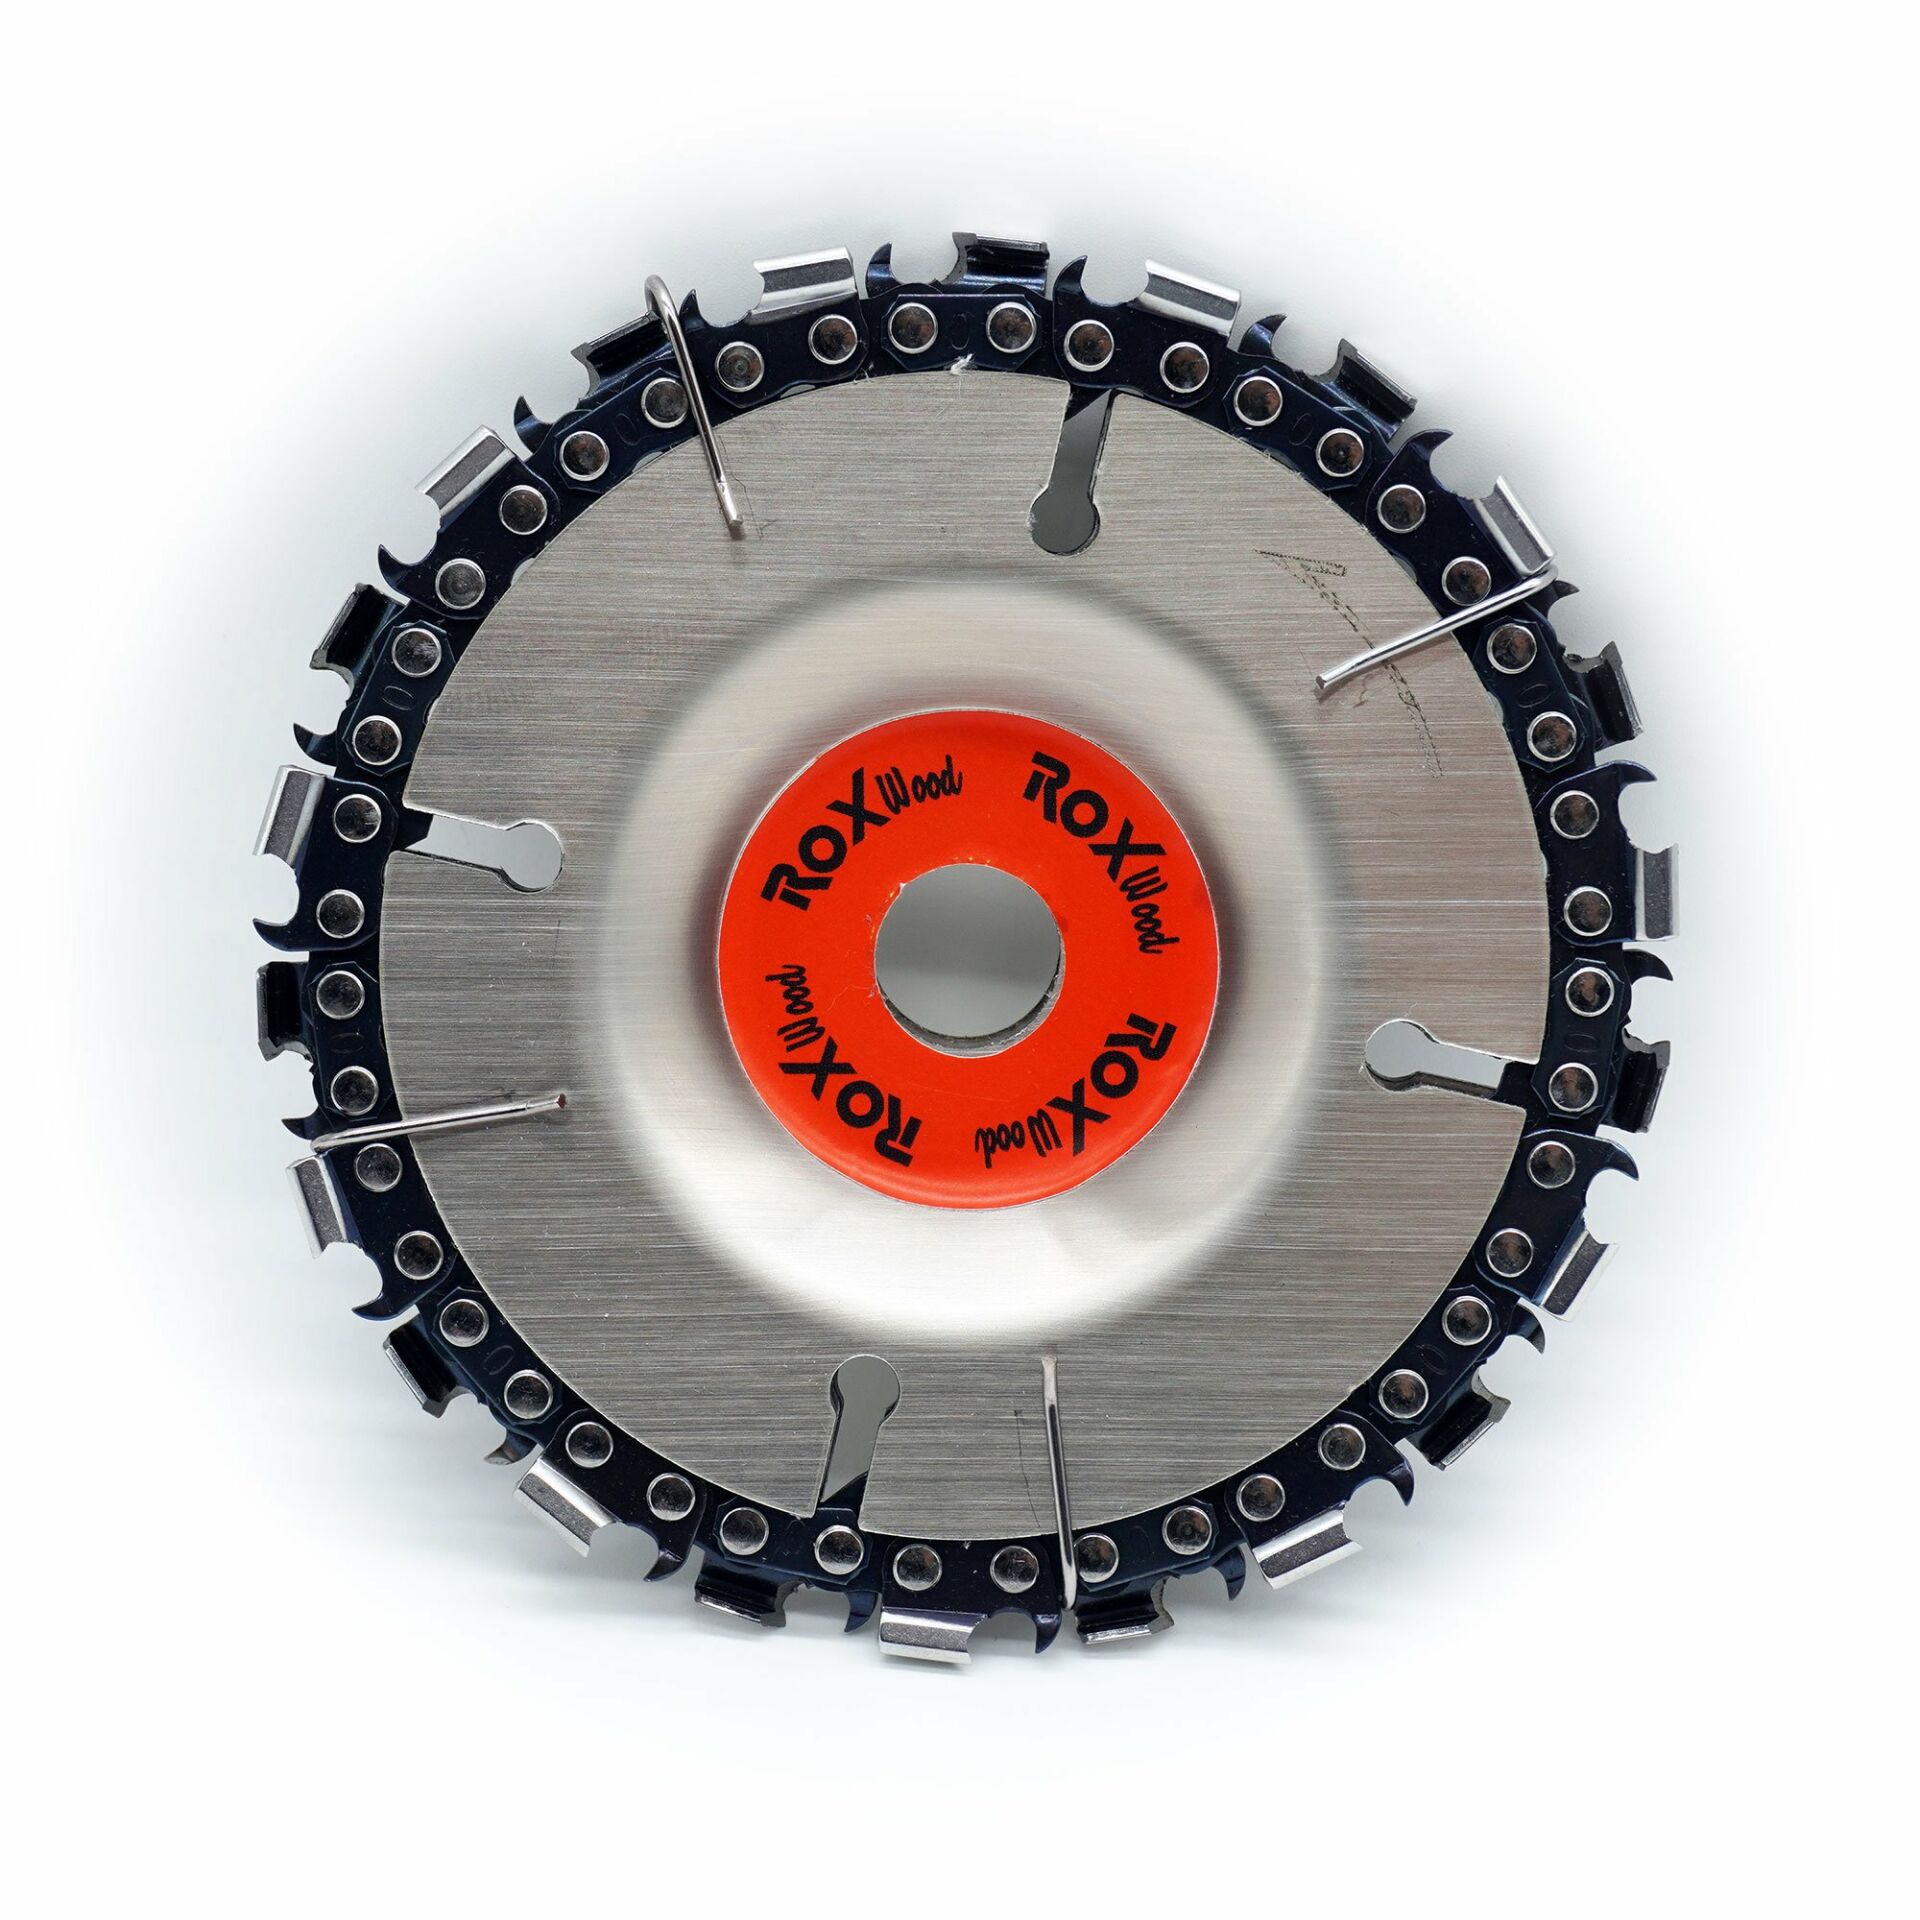 Rox Wood Ahşap Oyma Disk 115 Mm